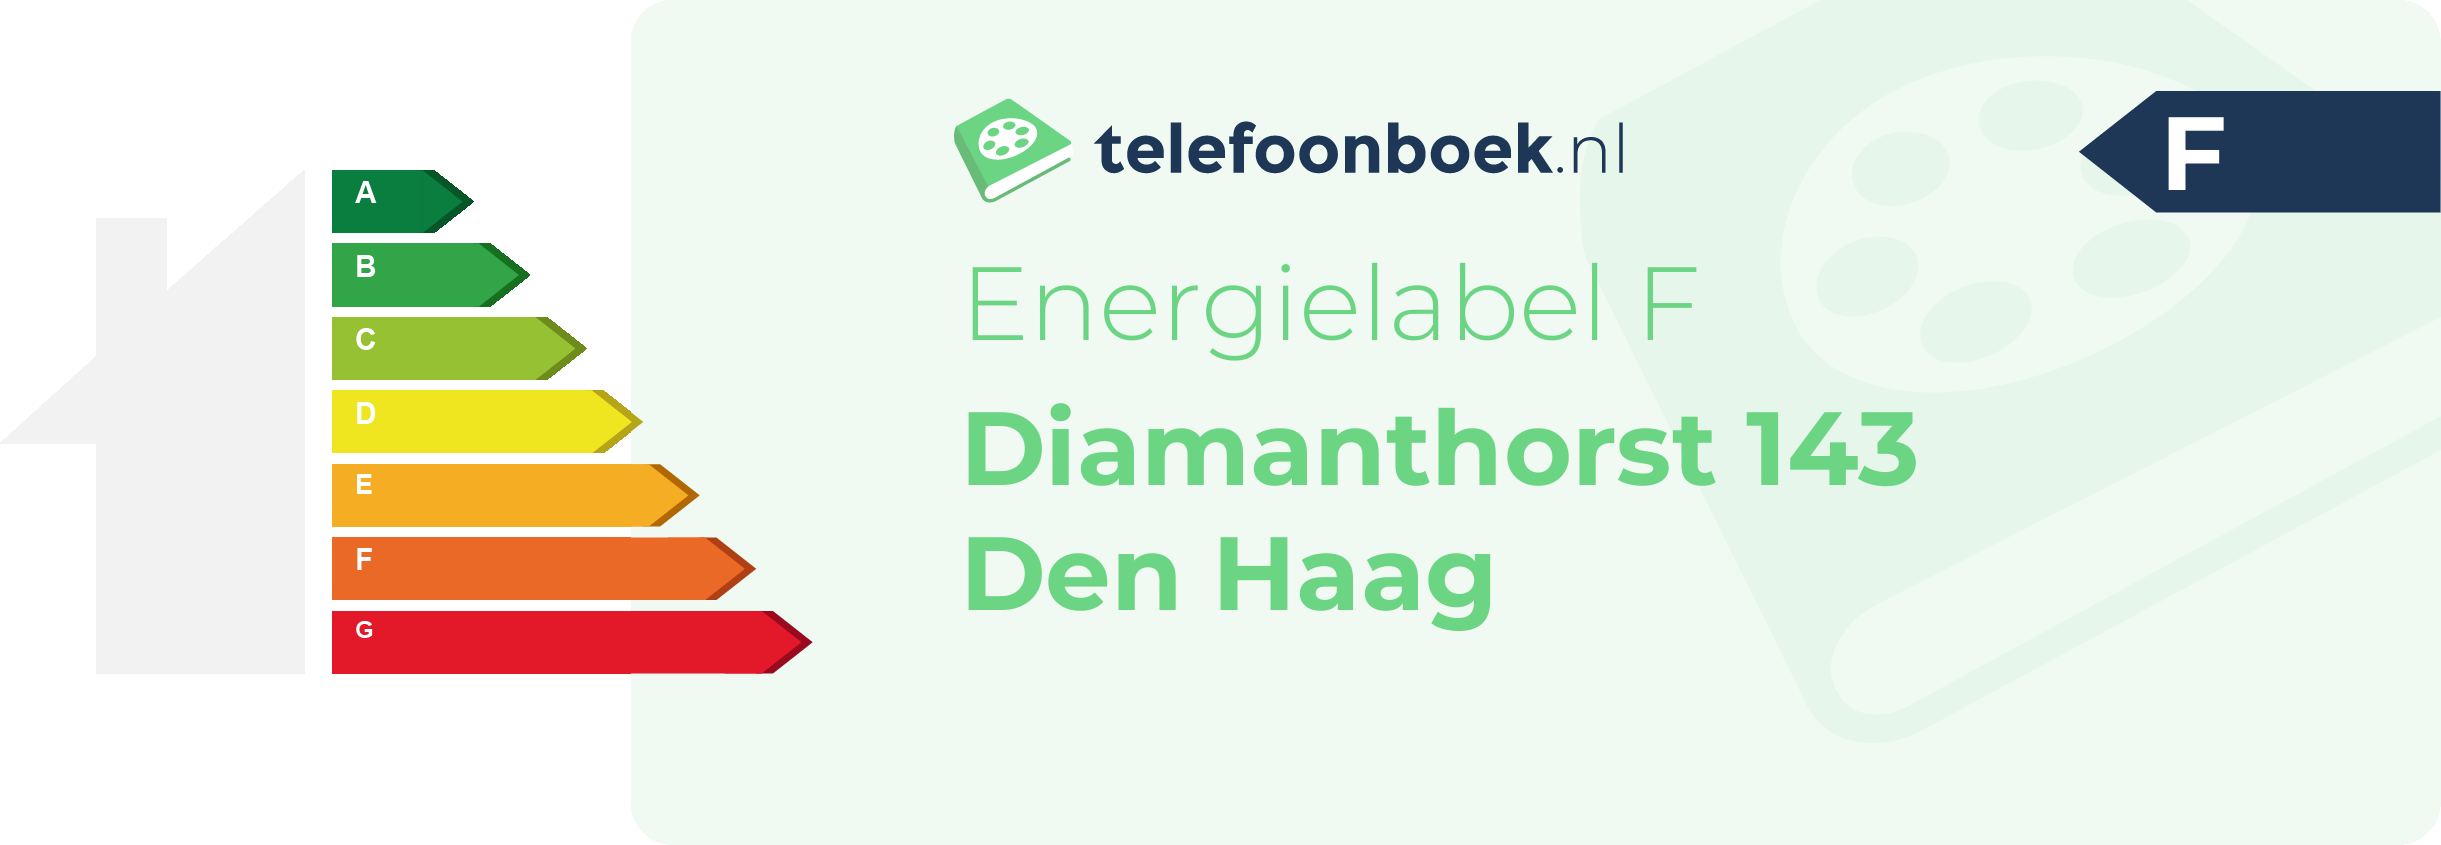 Energielabel Diamanthorst 143 Den Haag